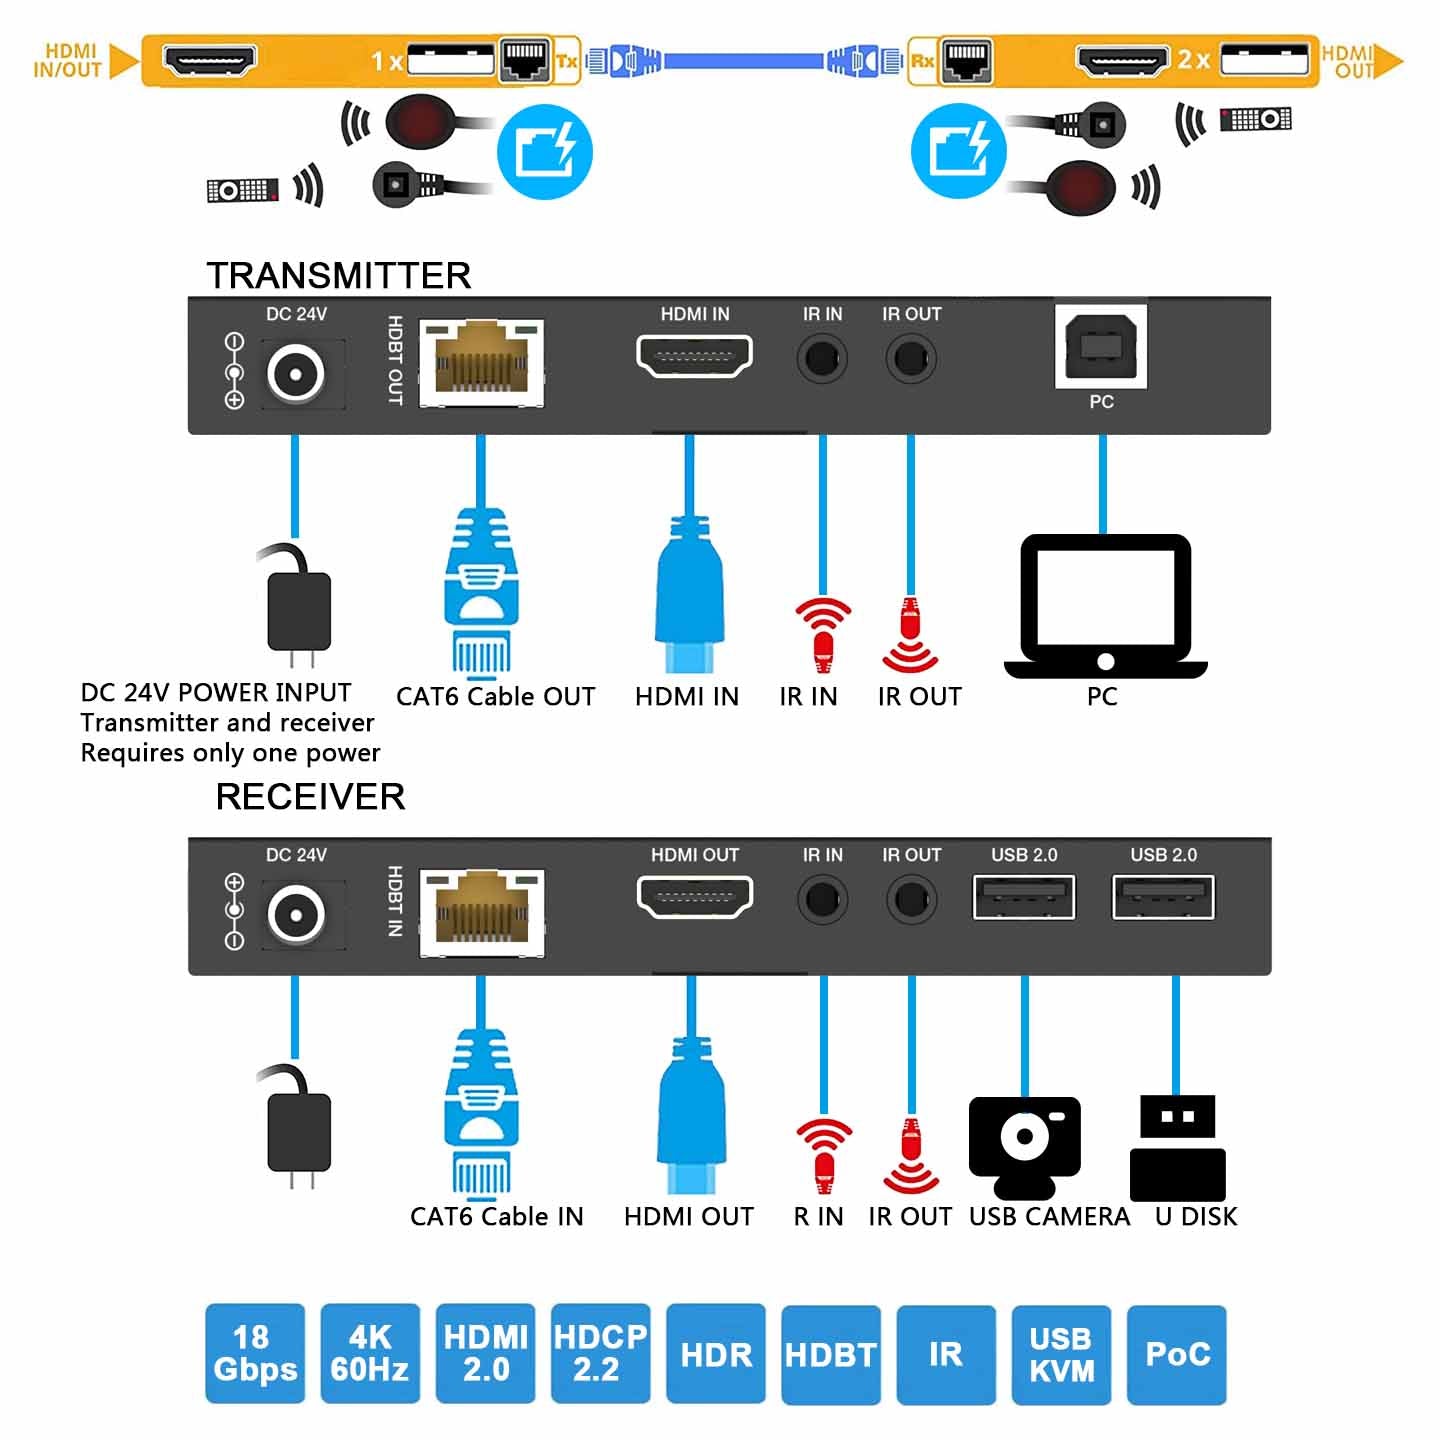 4K HDBaseT HDMI KVM Extender over CAT6 Cable 150m USB 2.0 IR description